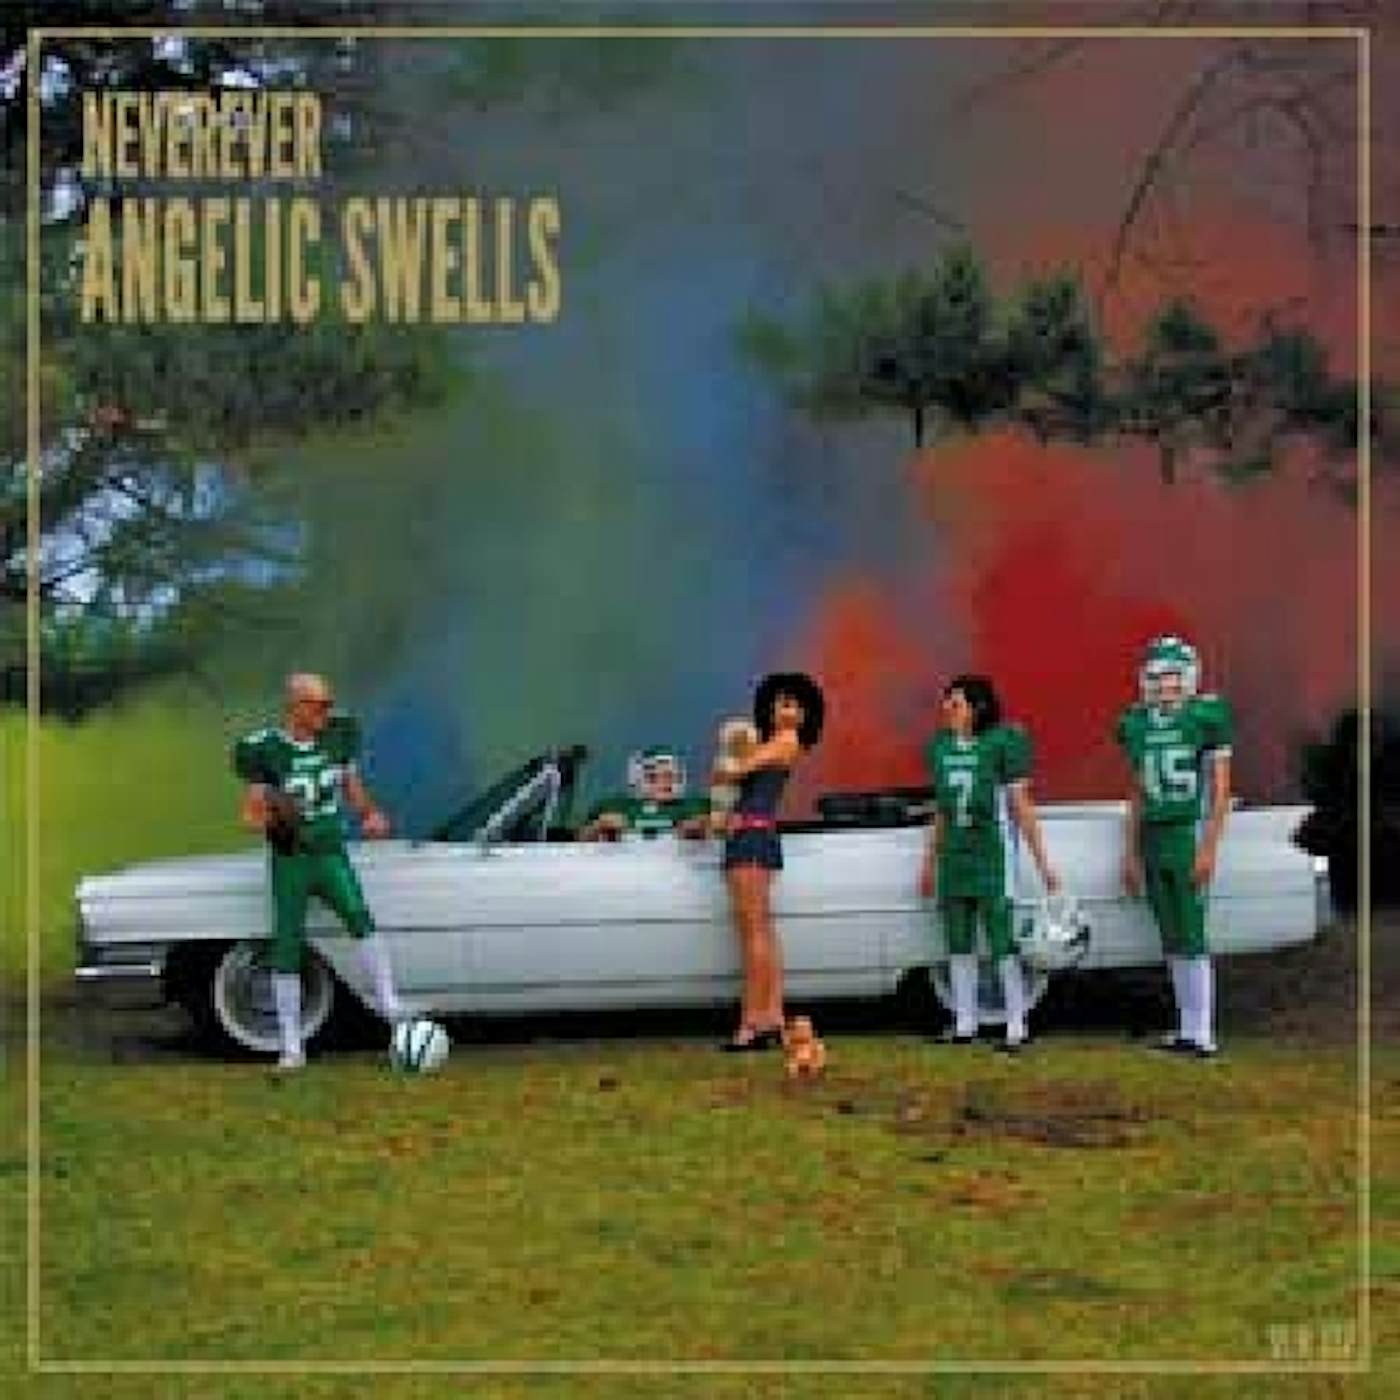 Neverever ANGELIC SWELLS CD